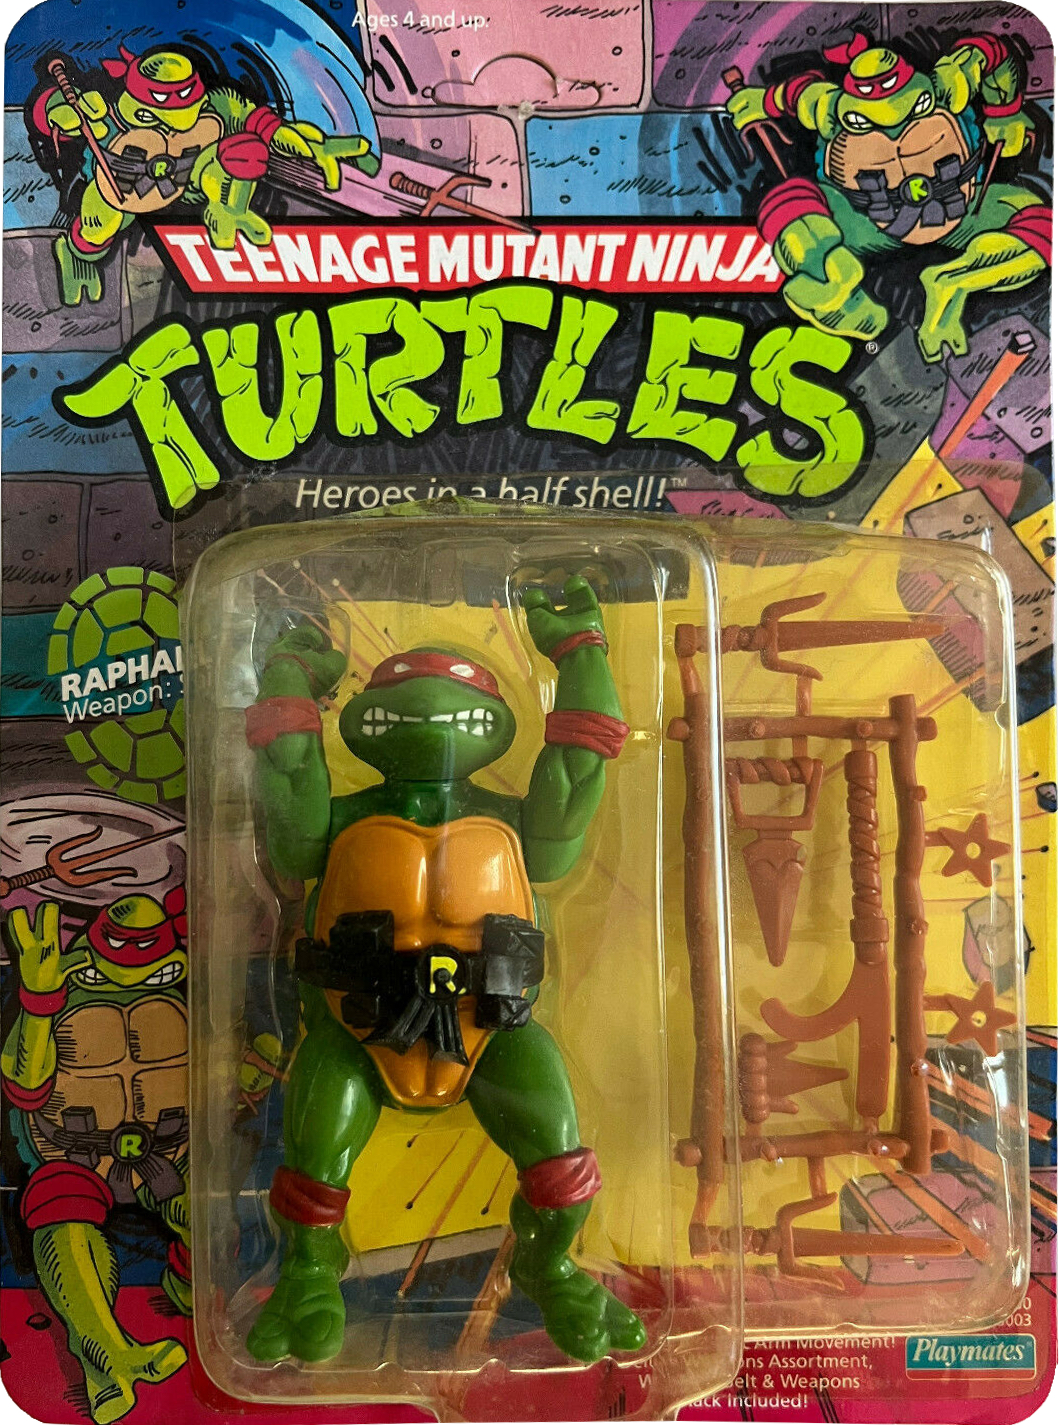 https://www.actionfigure411.com/teenage-mutant-ninja-turtles/images/raphael-4849.jpg